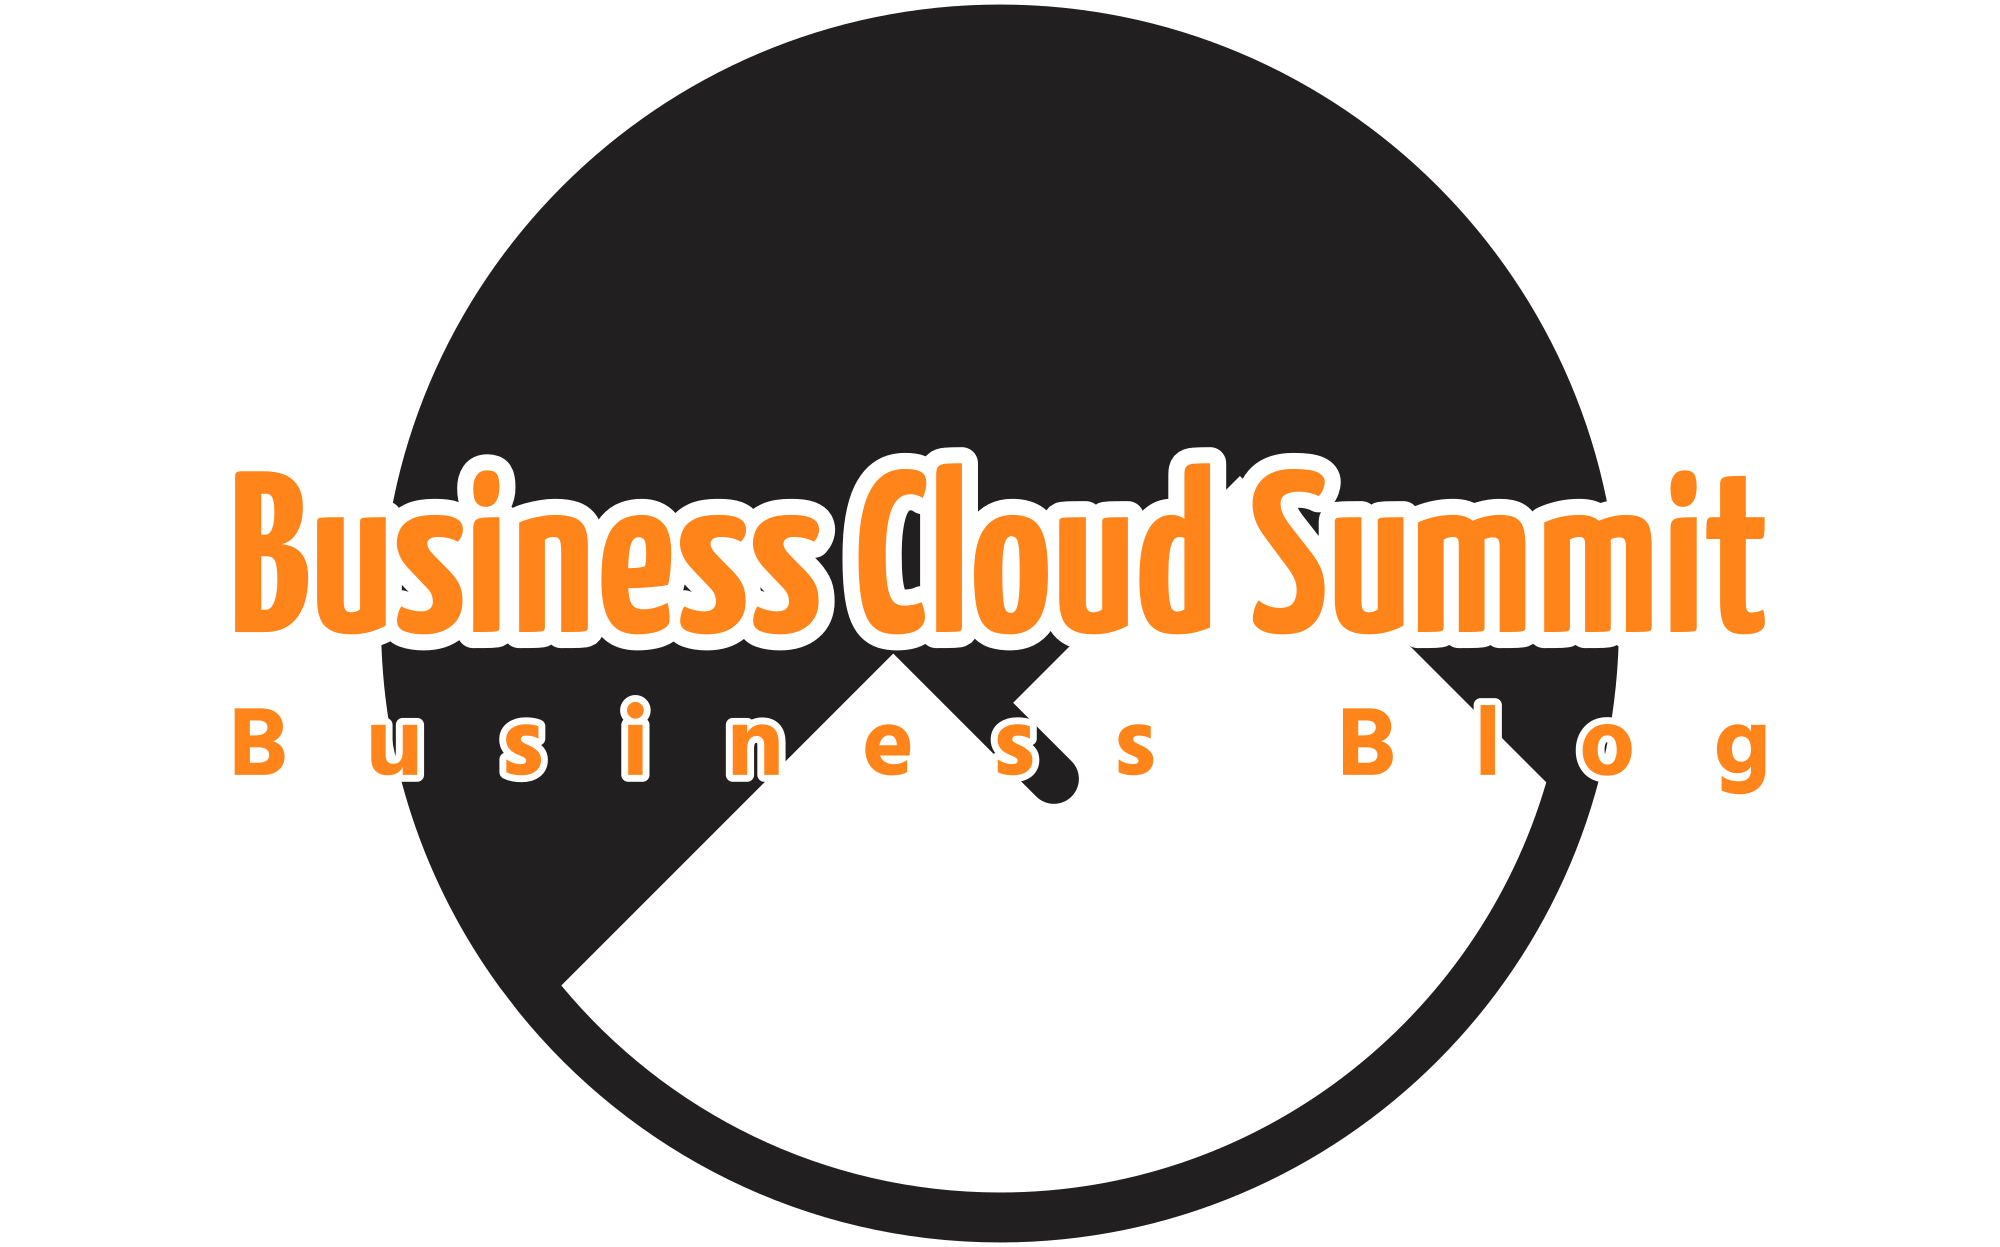 Business Cloud Summit